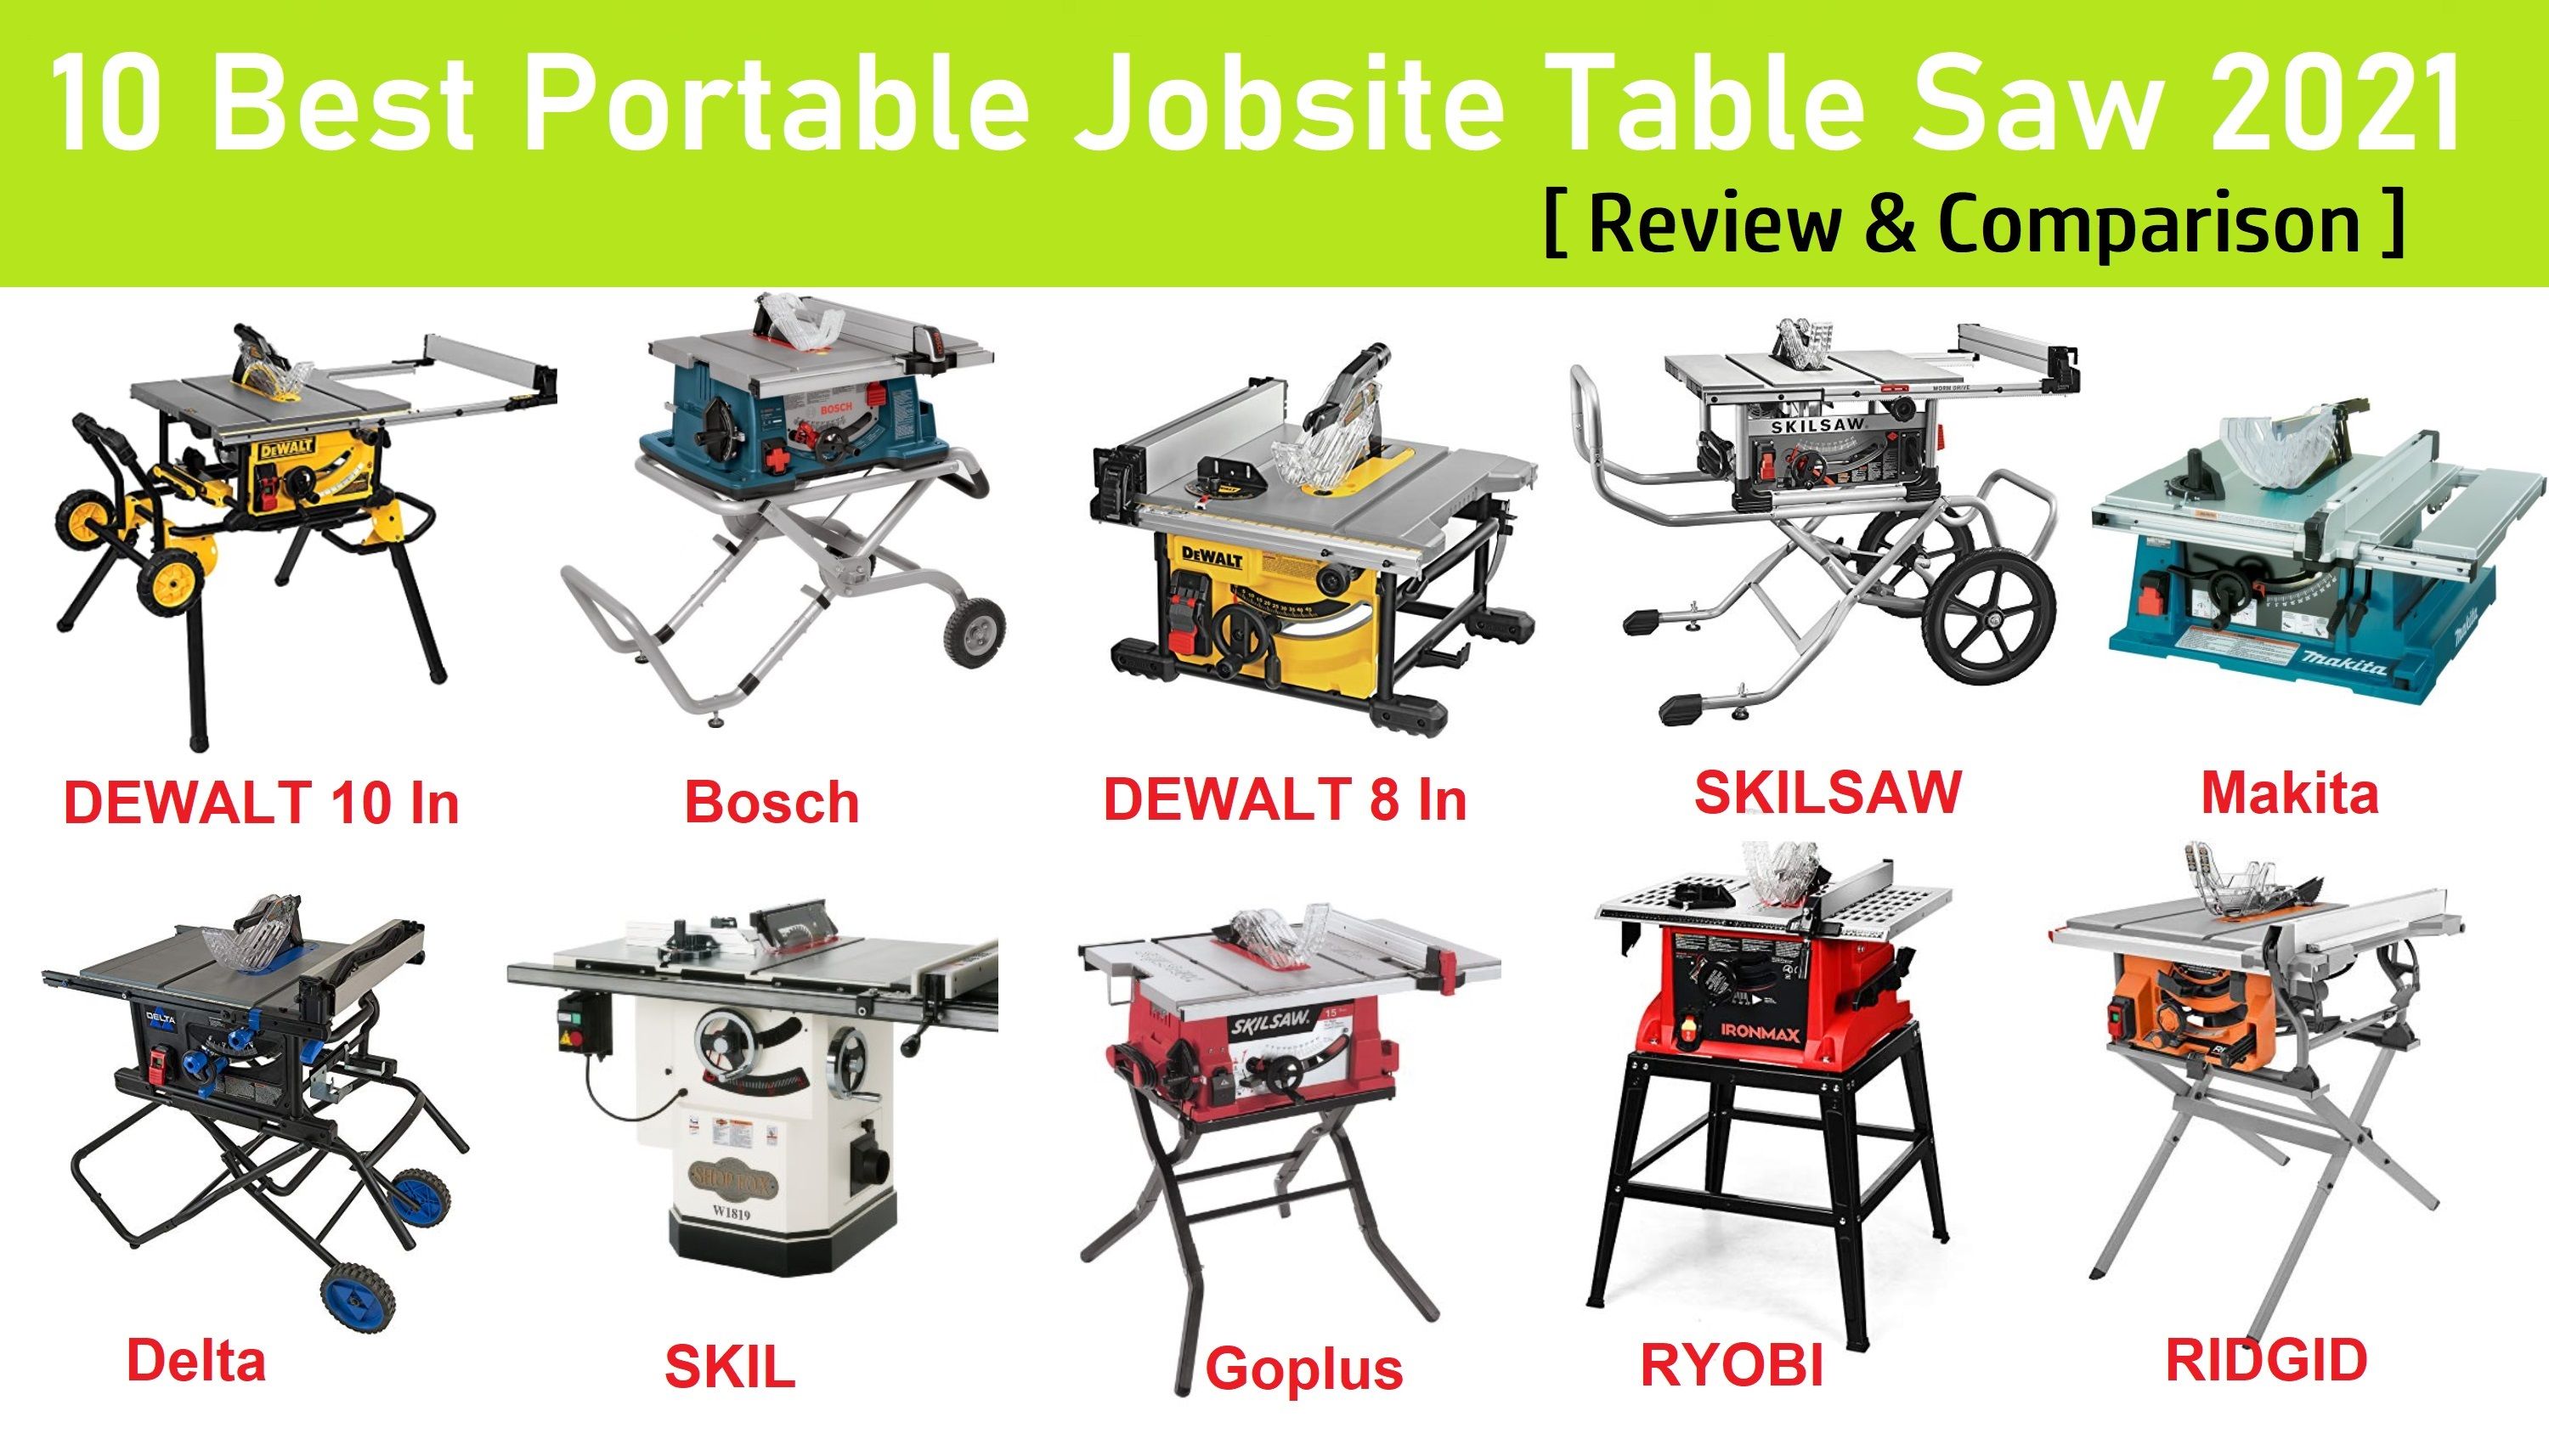 Best Portable Jobsite Table Saw 2021 review & comparison